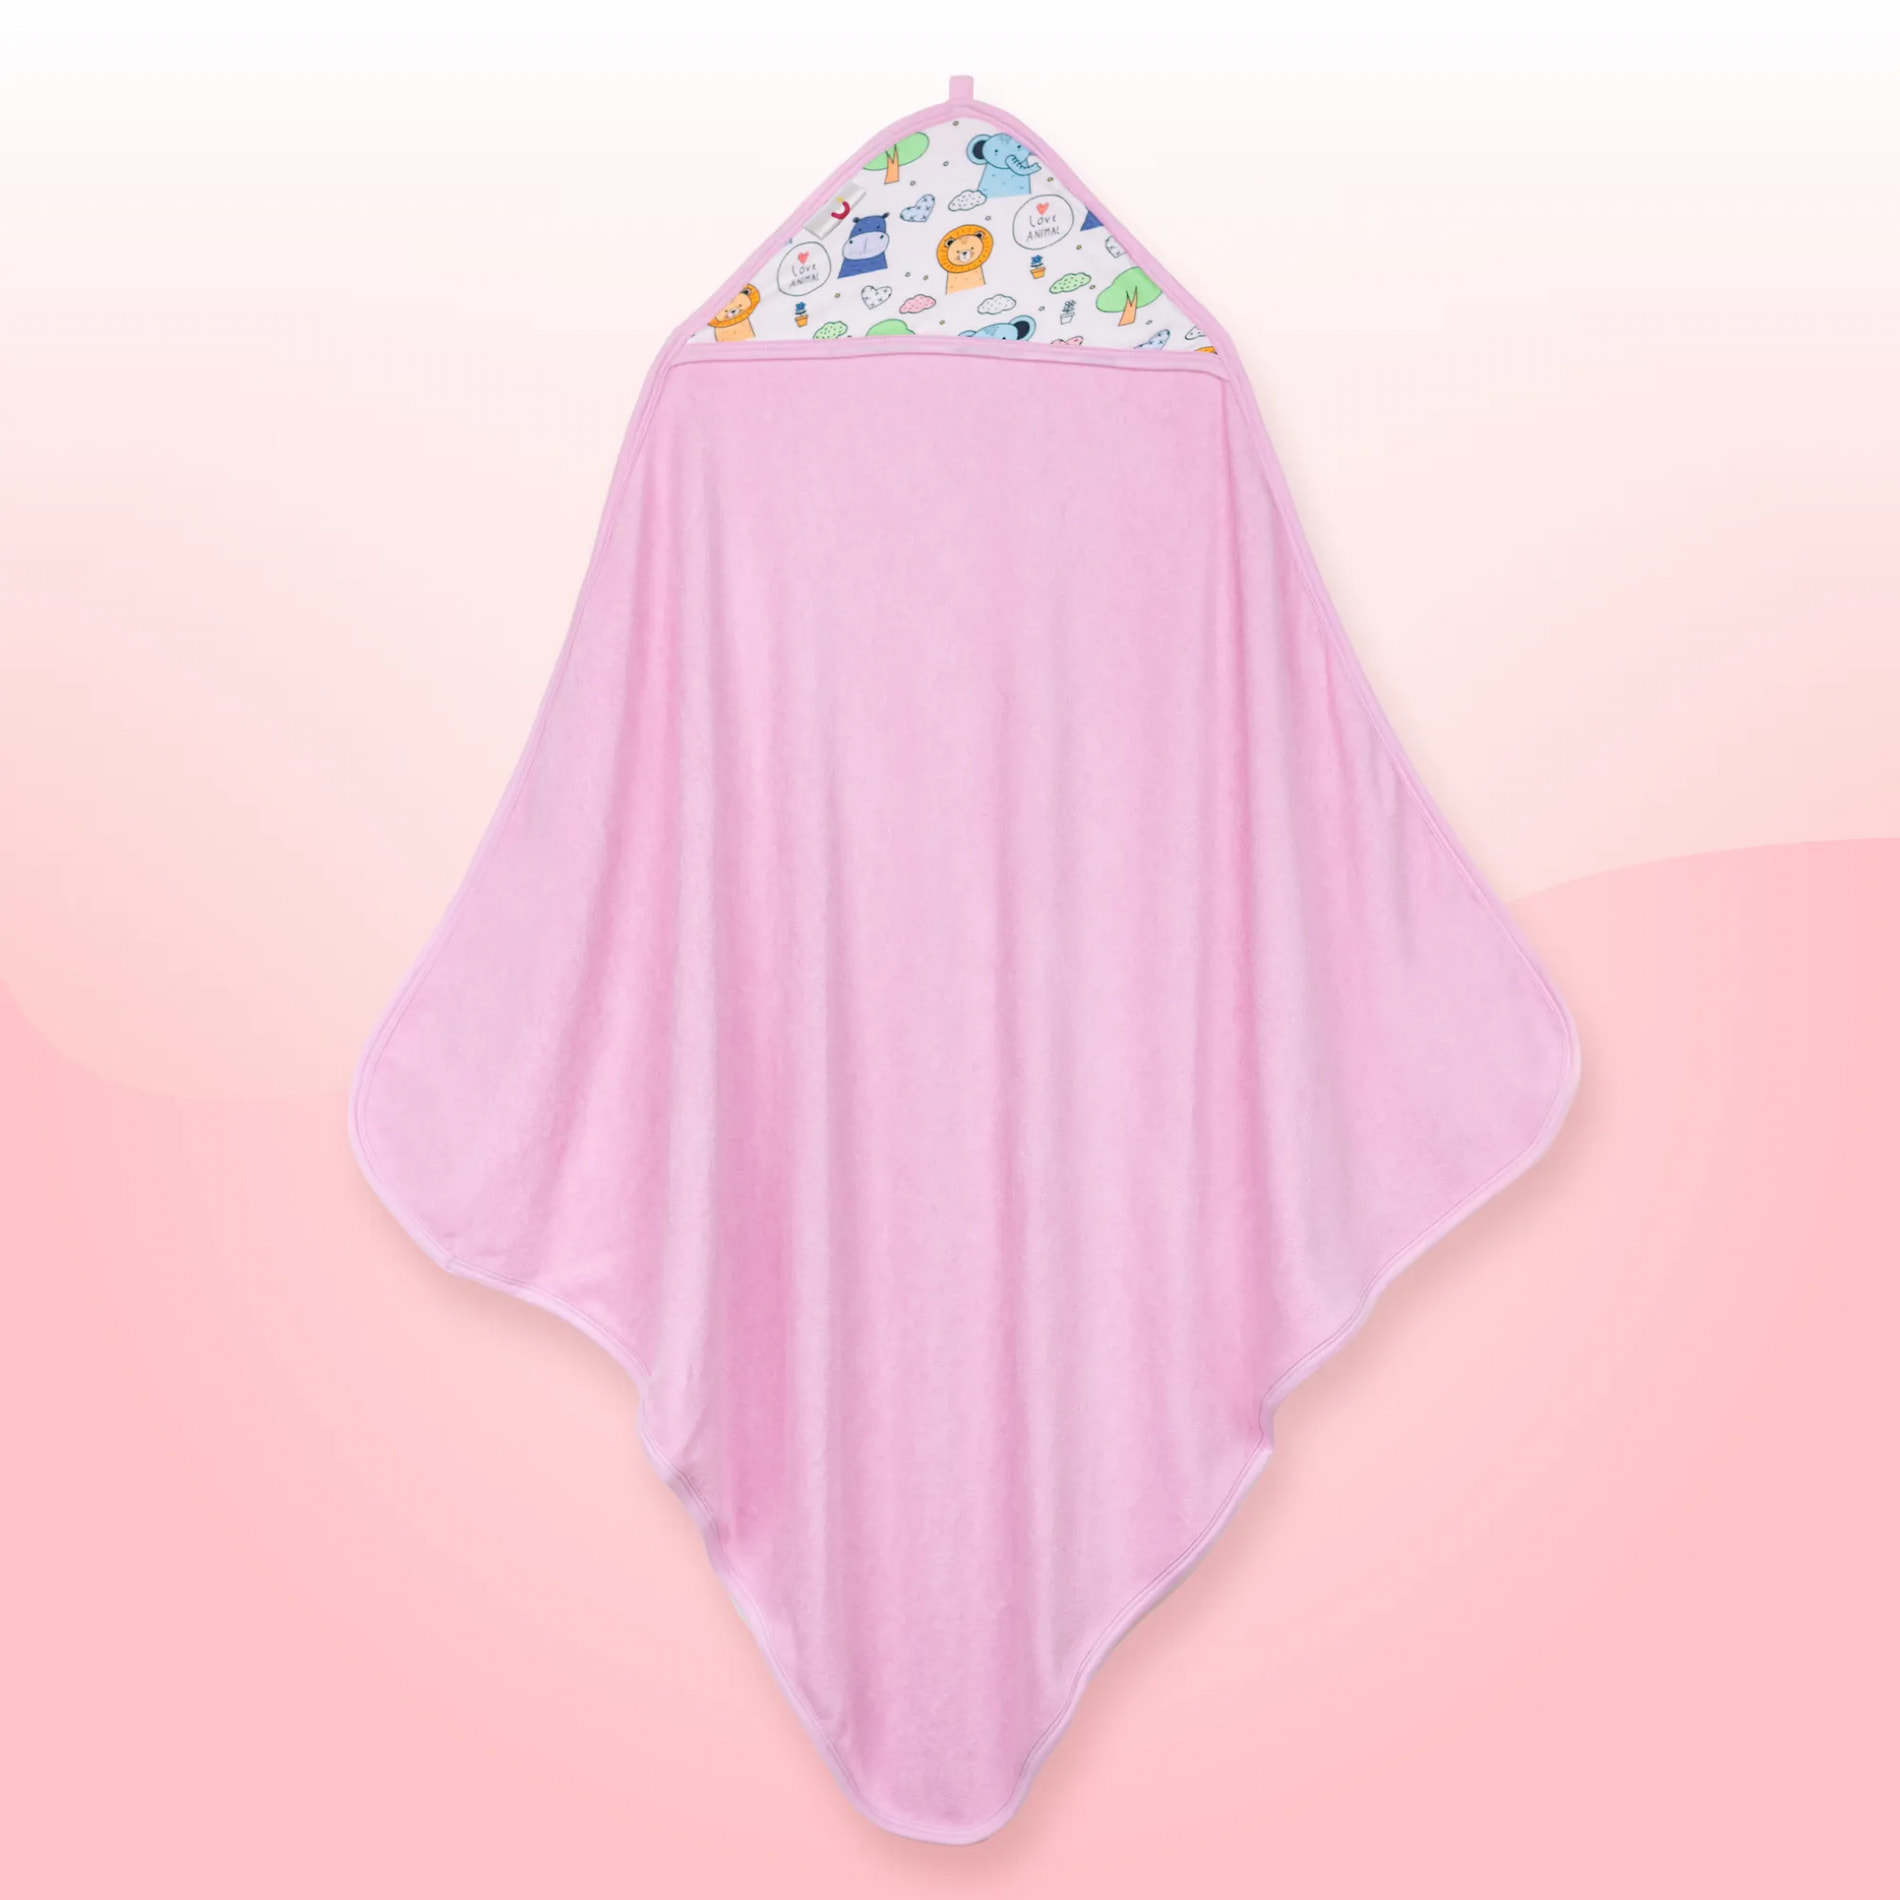 Baby Hooded Towel - Baby Safari - Lavender